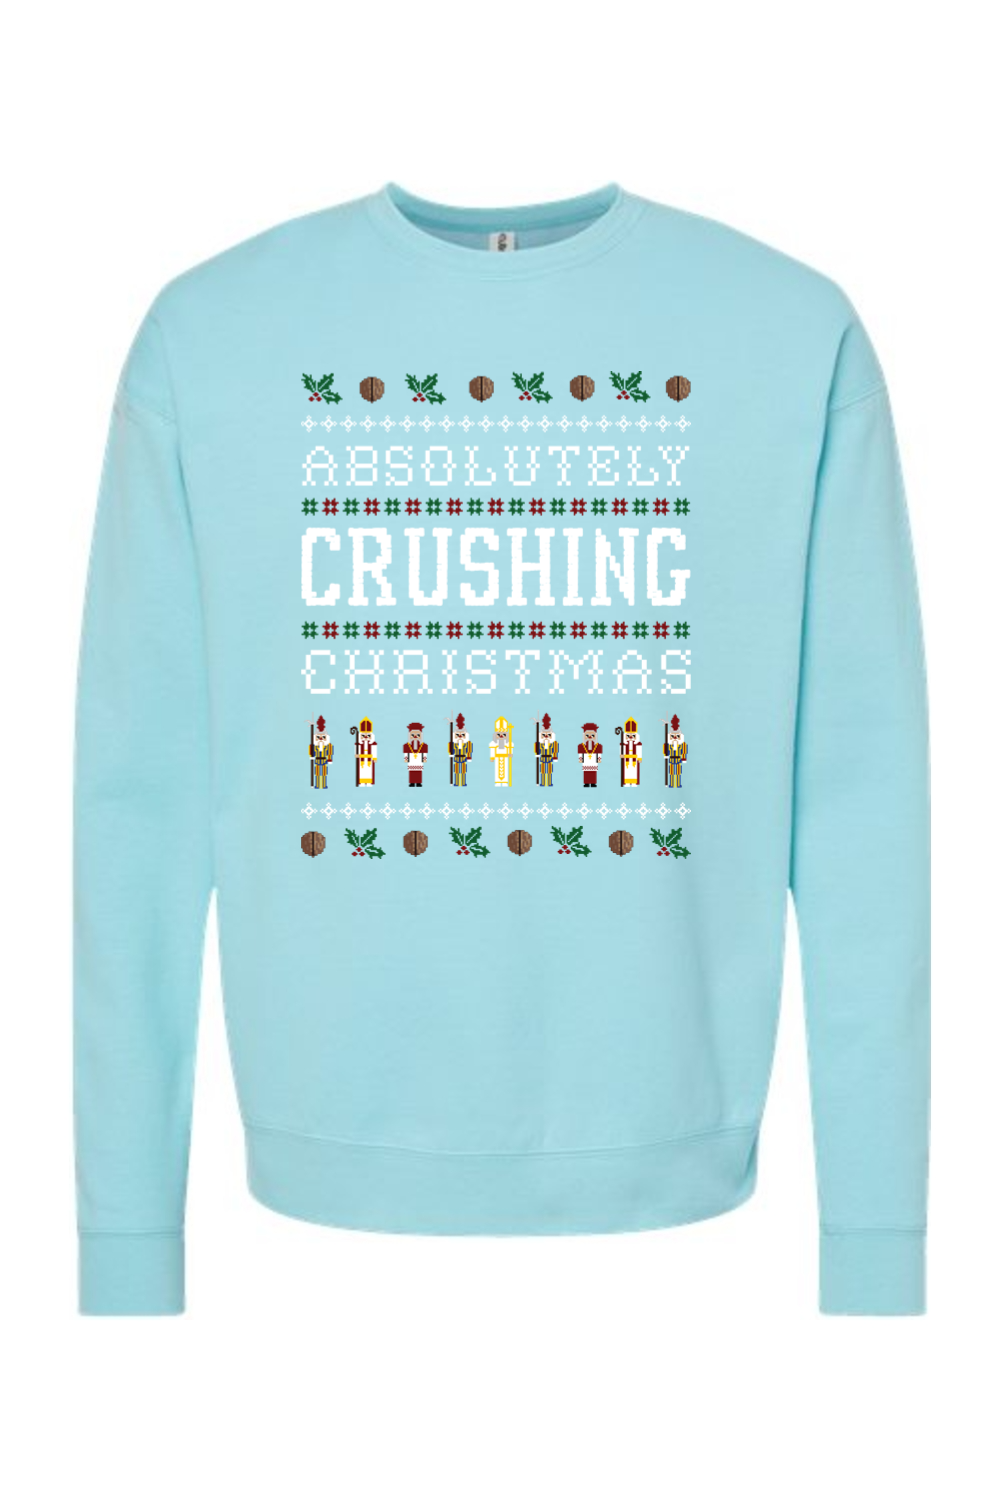 Absolutely Crushing Christmas - Crewneck Sweatshirt